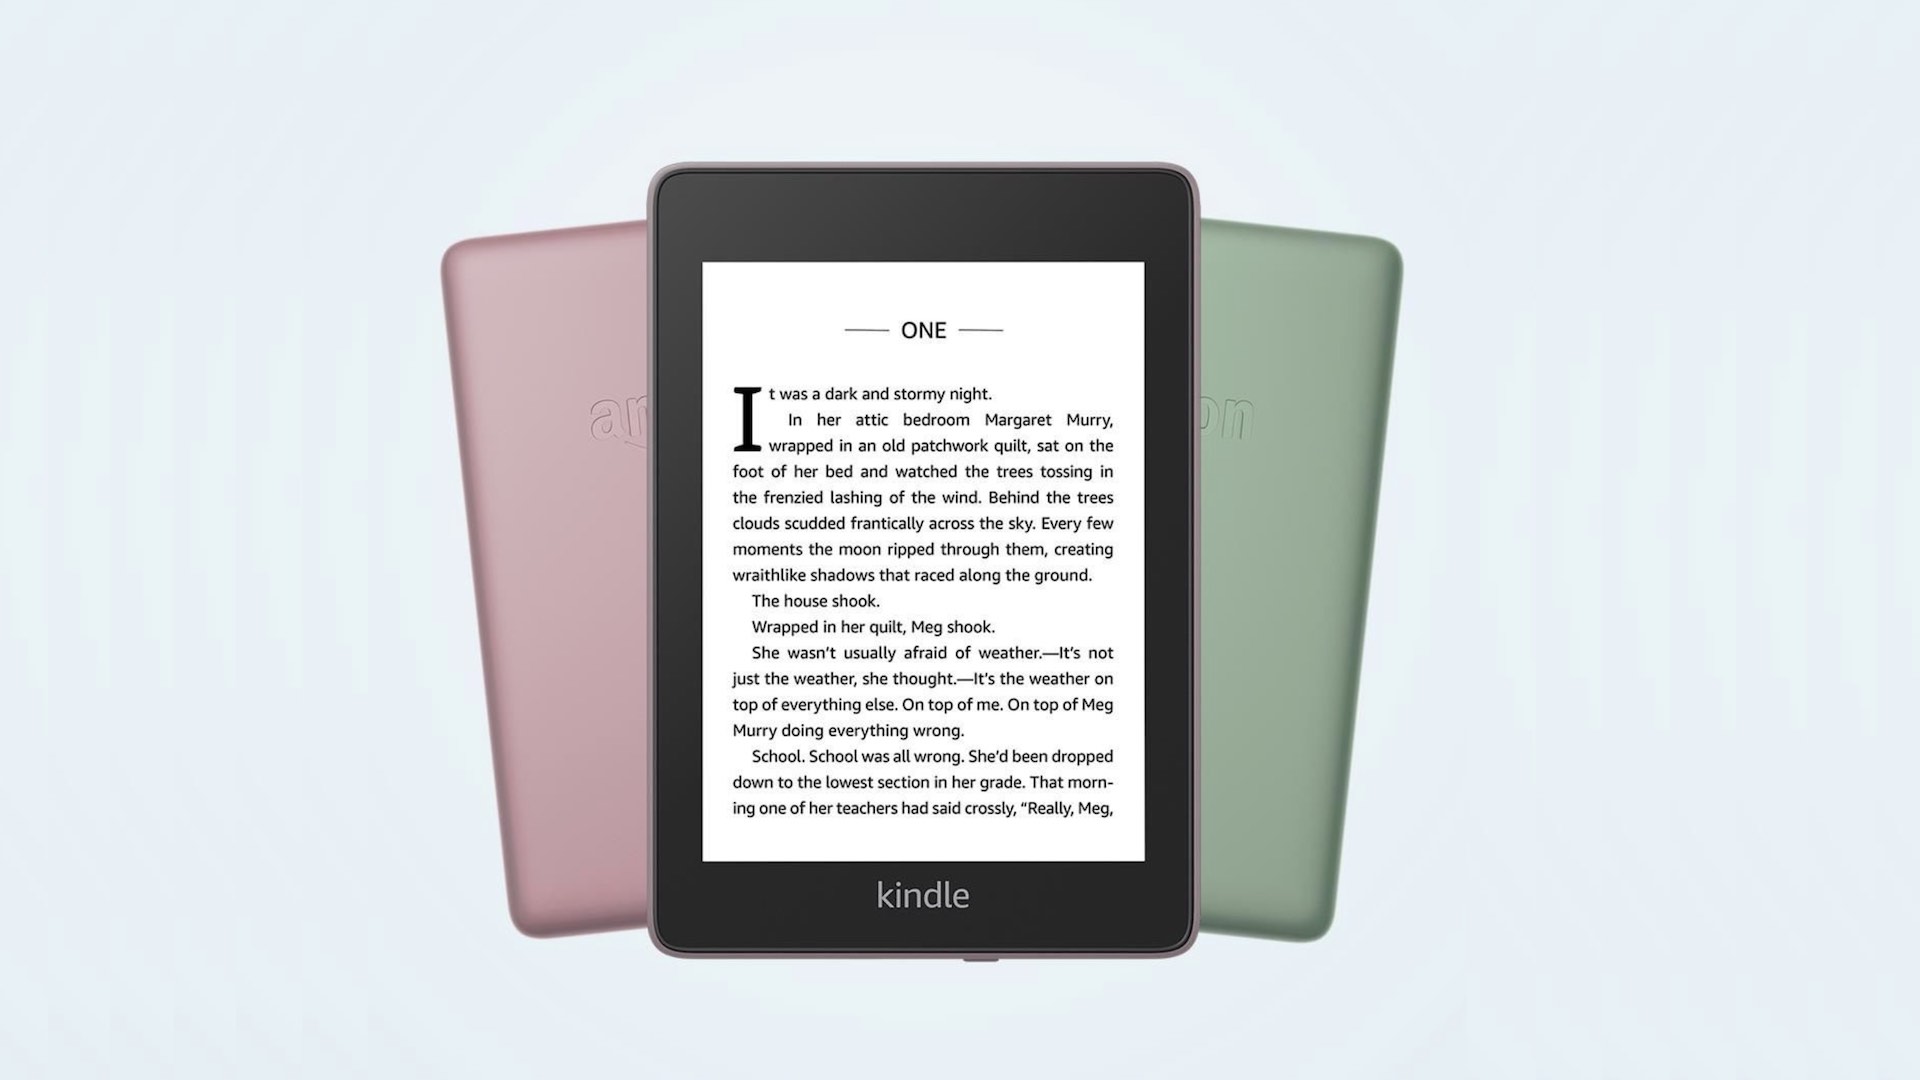 Libros Digitales Kindle